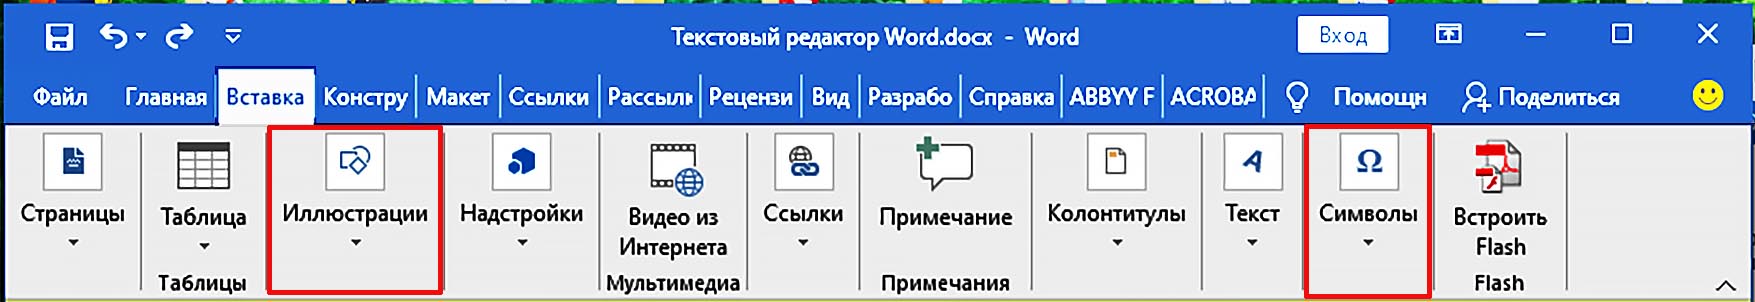  tekstovyj-redaktor-word-instrukciya_11.jpg 